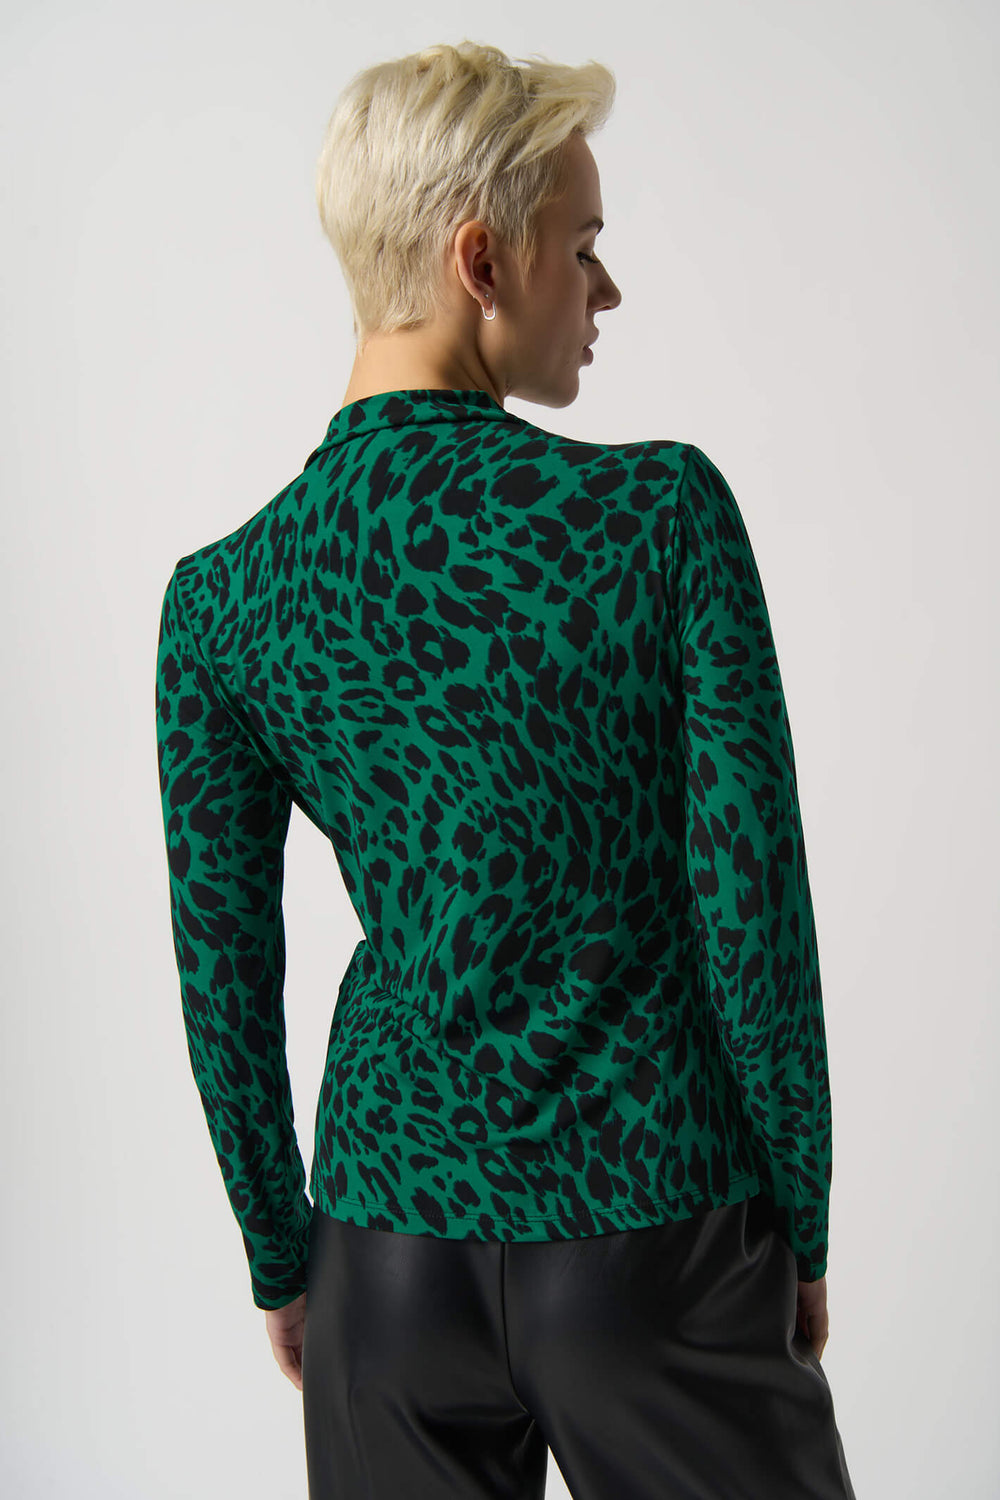 Joseph Ribkoff 233256 Emerald Green Leopard Print Tie Front Top - Experience Boutique